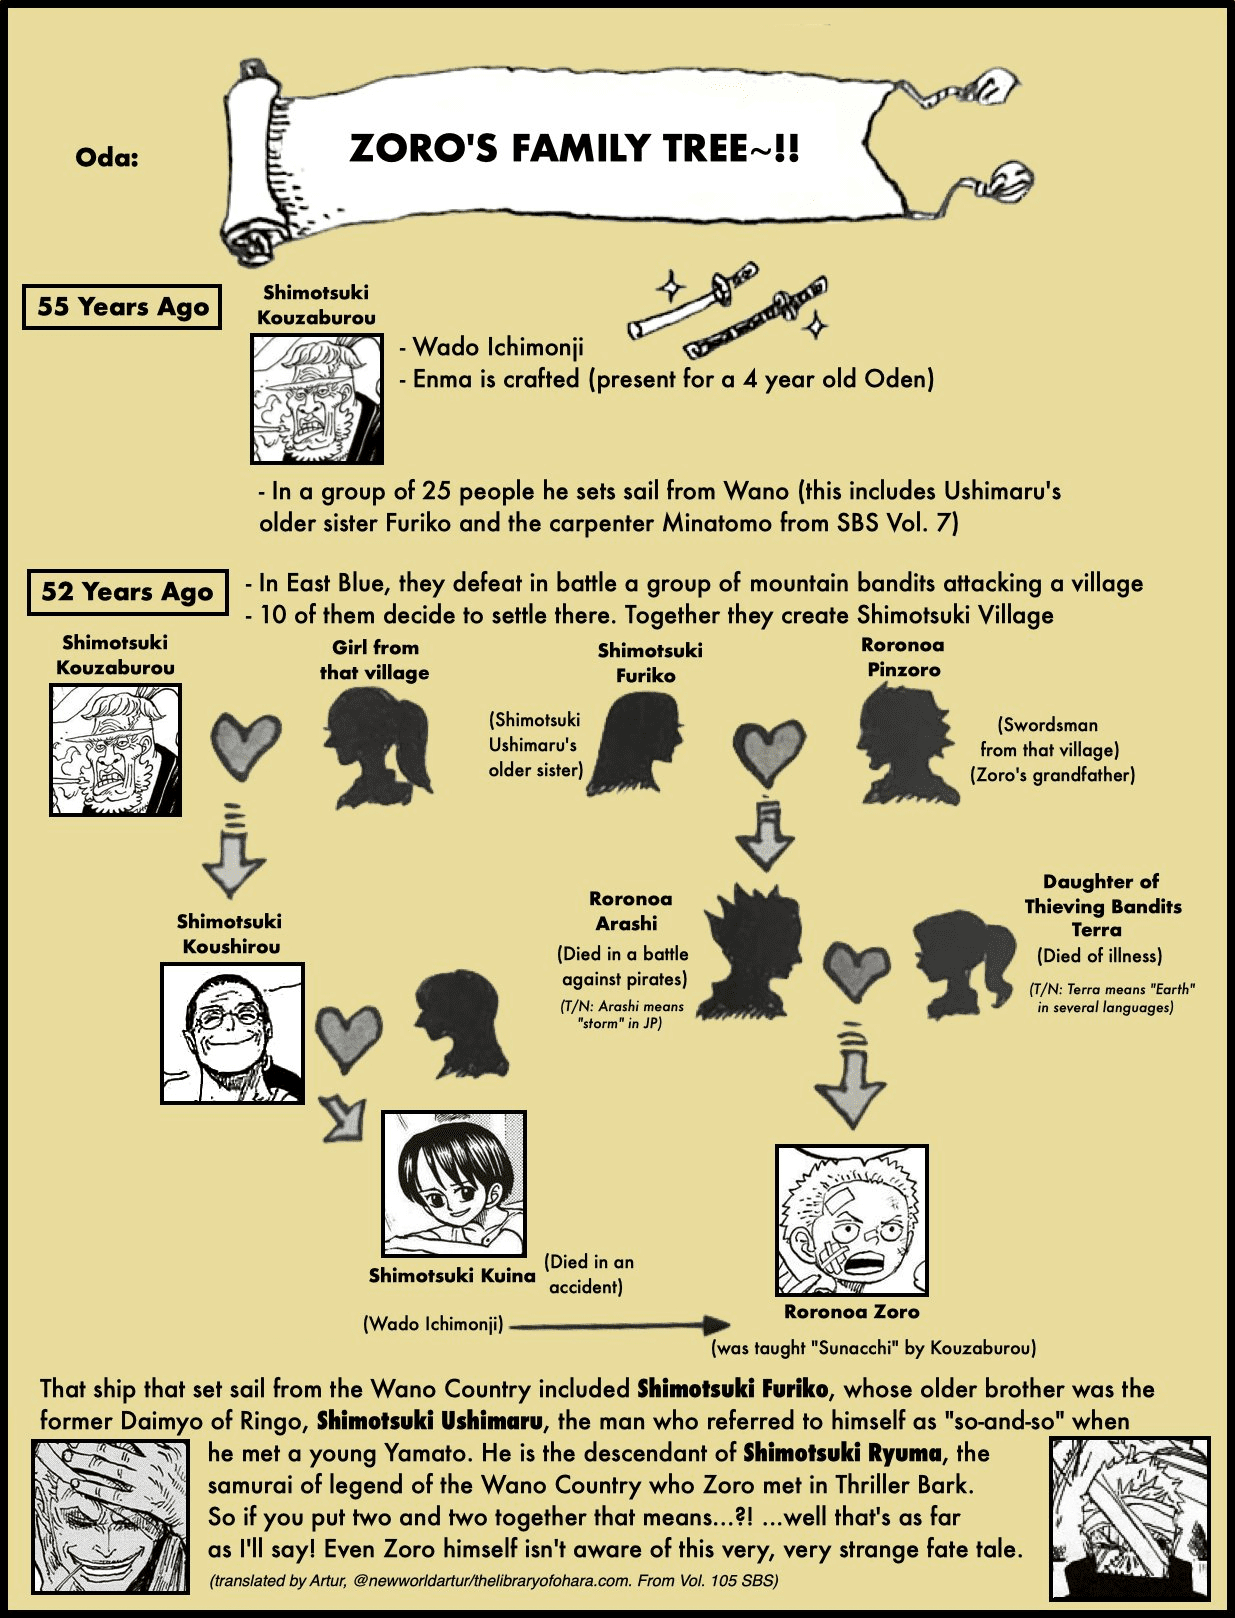 Zoro's family tree, and his relation to Shimotsuki clan and Ryuma